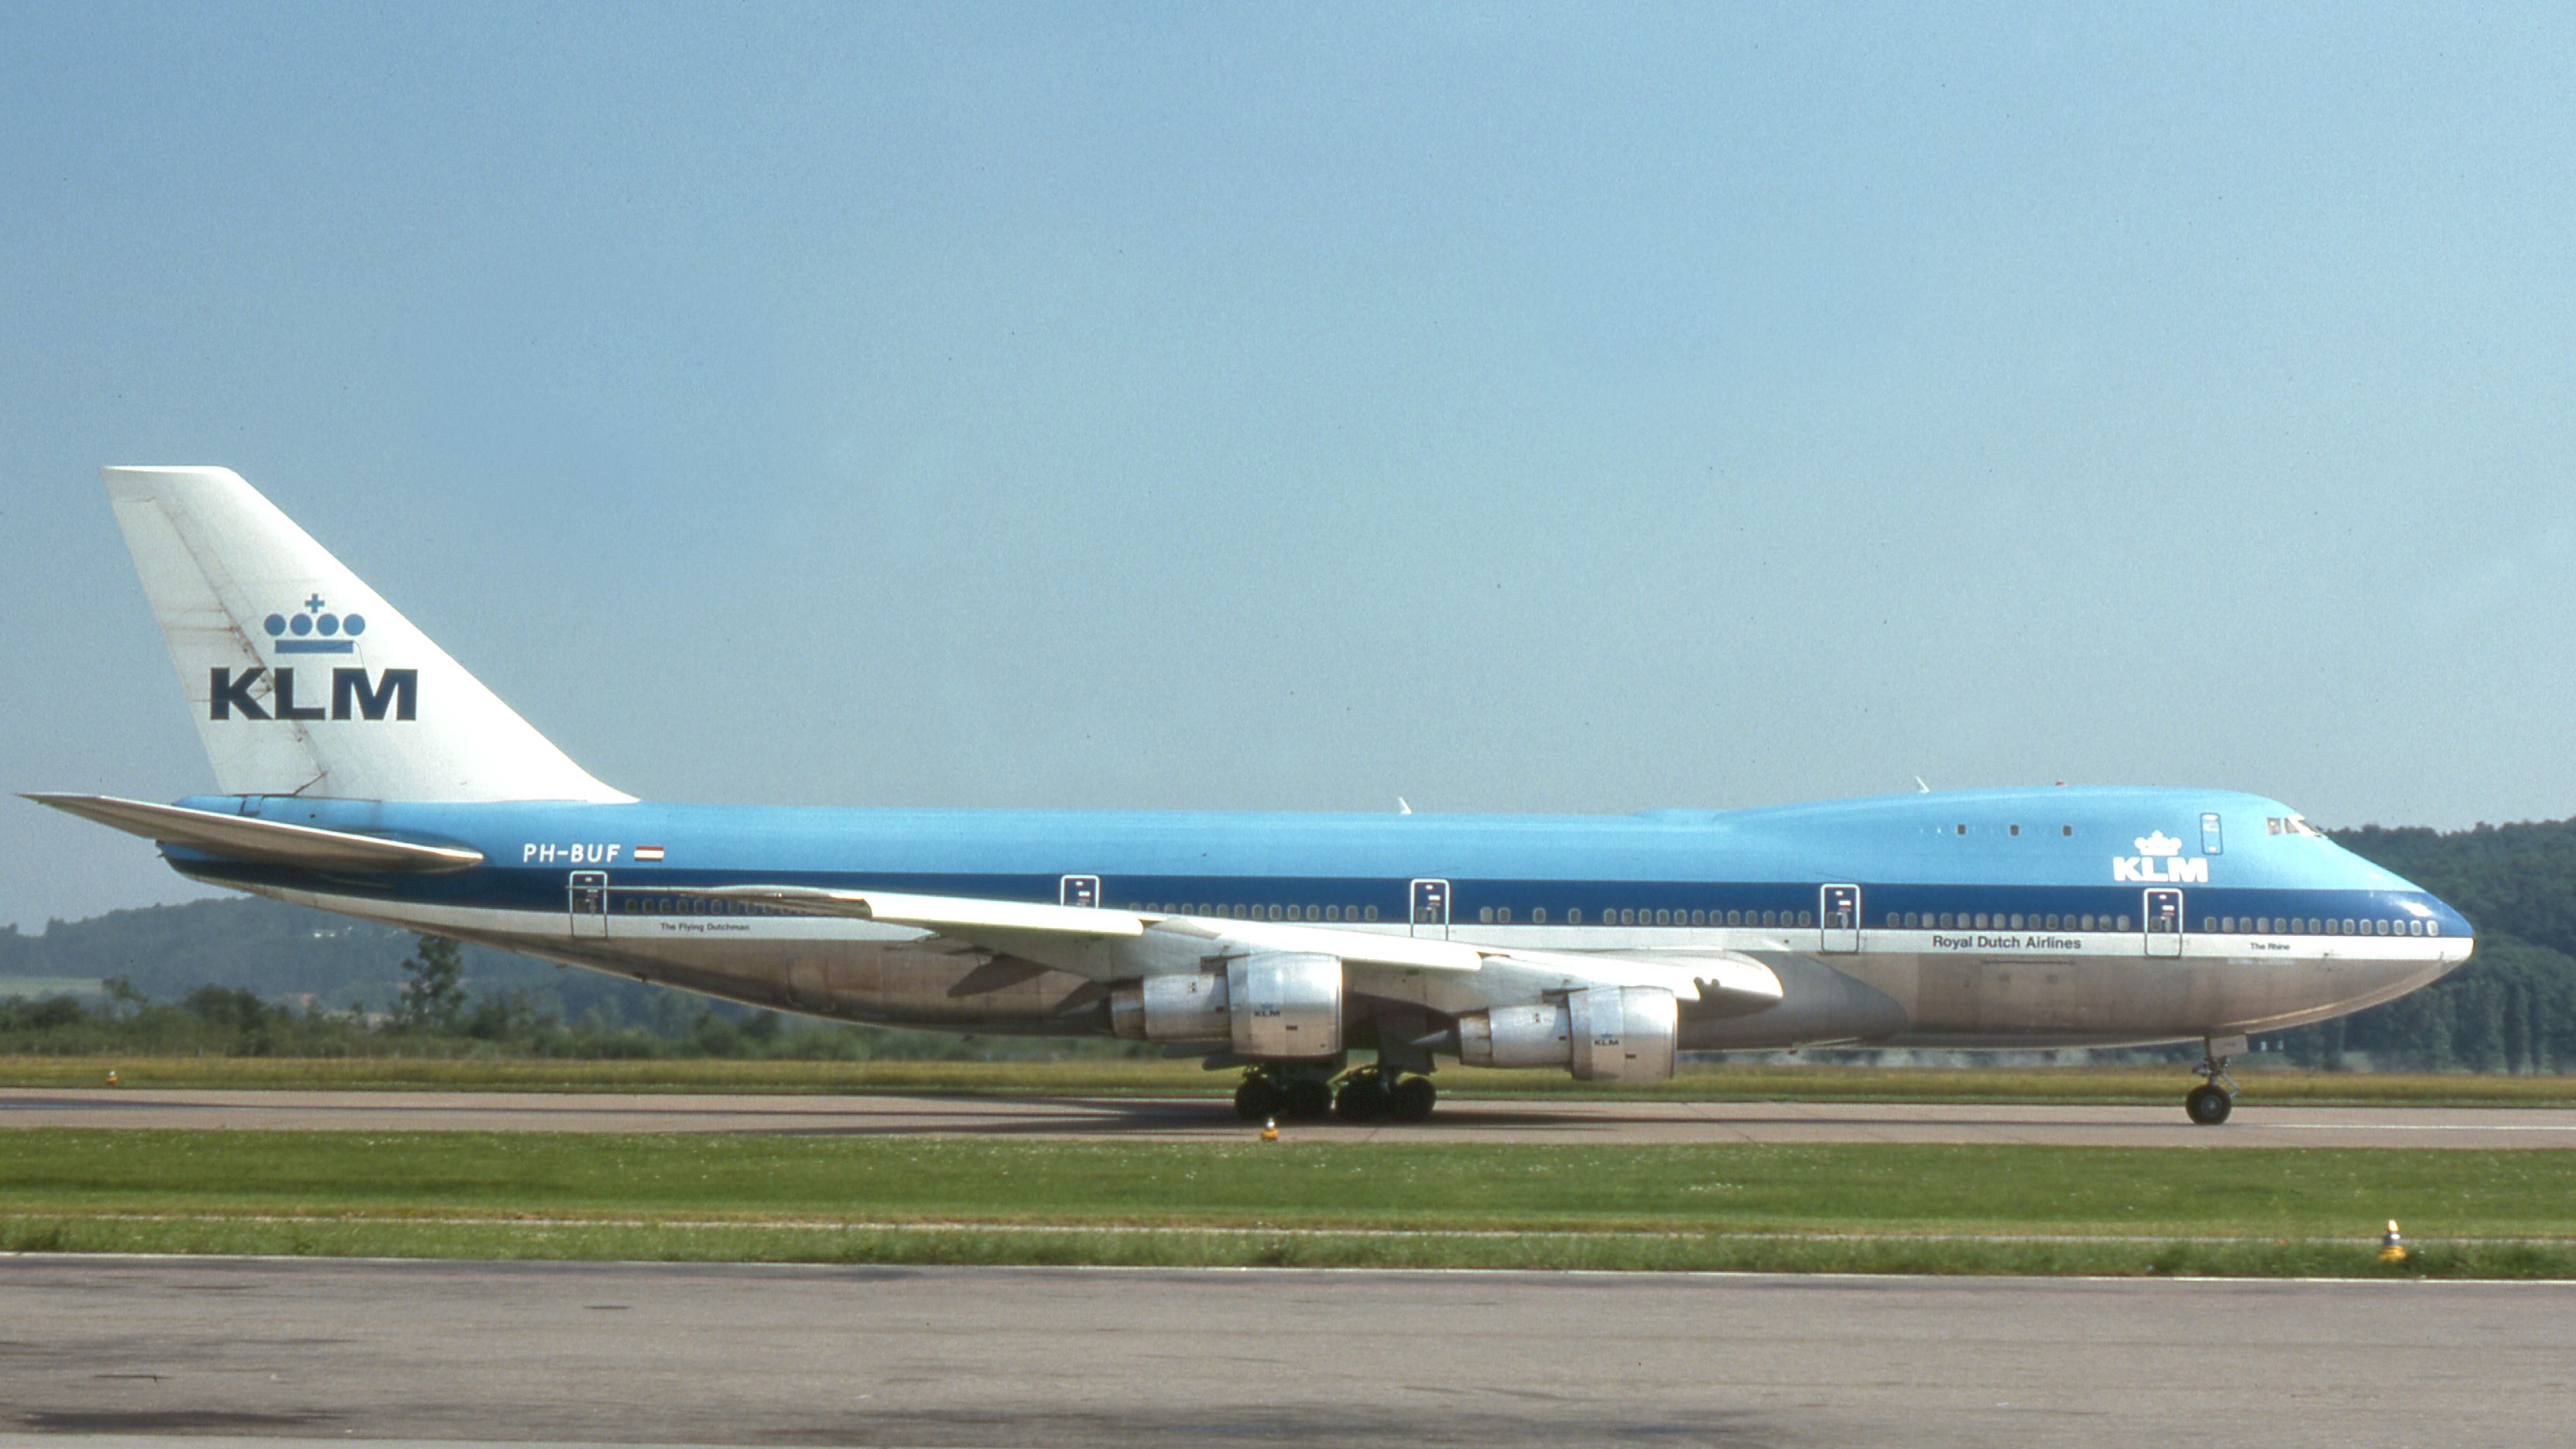 KLM Boeing 747-200 PH-BUF